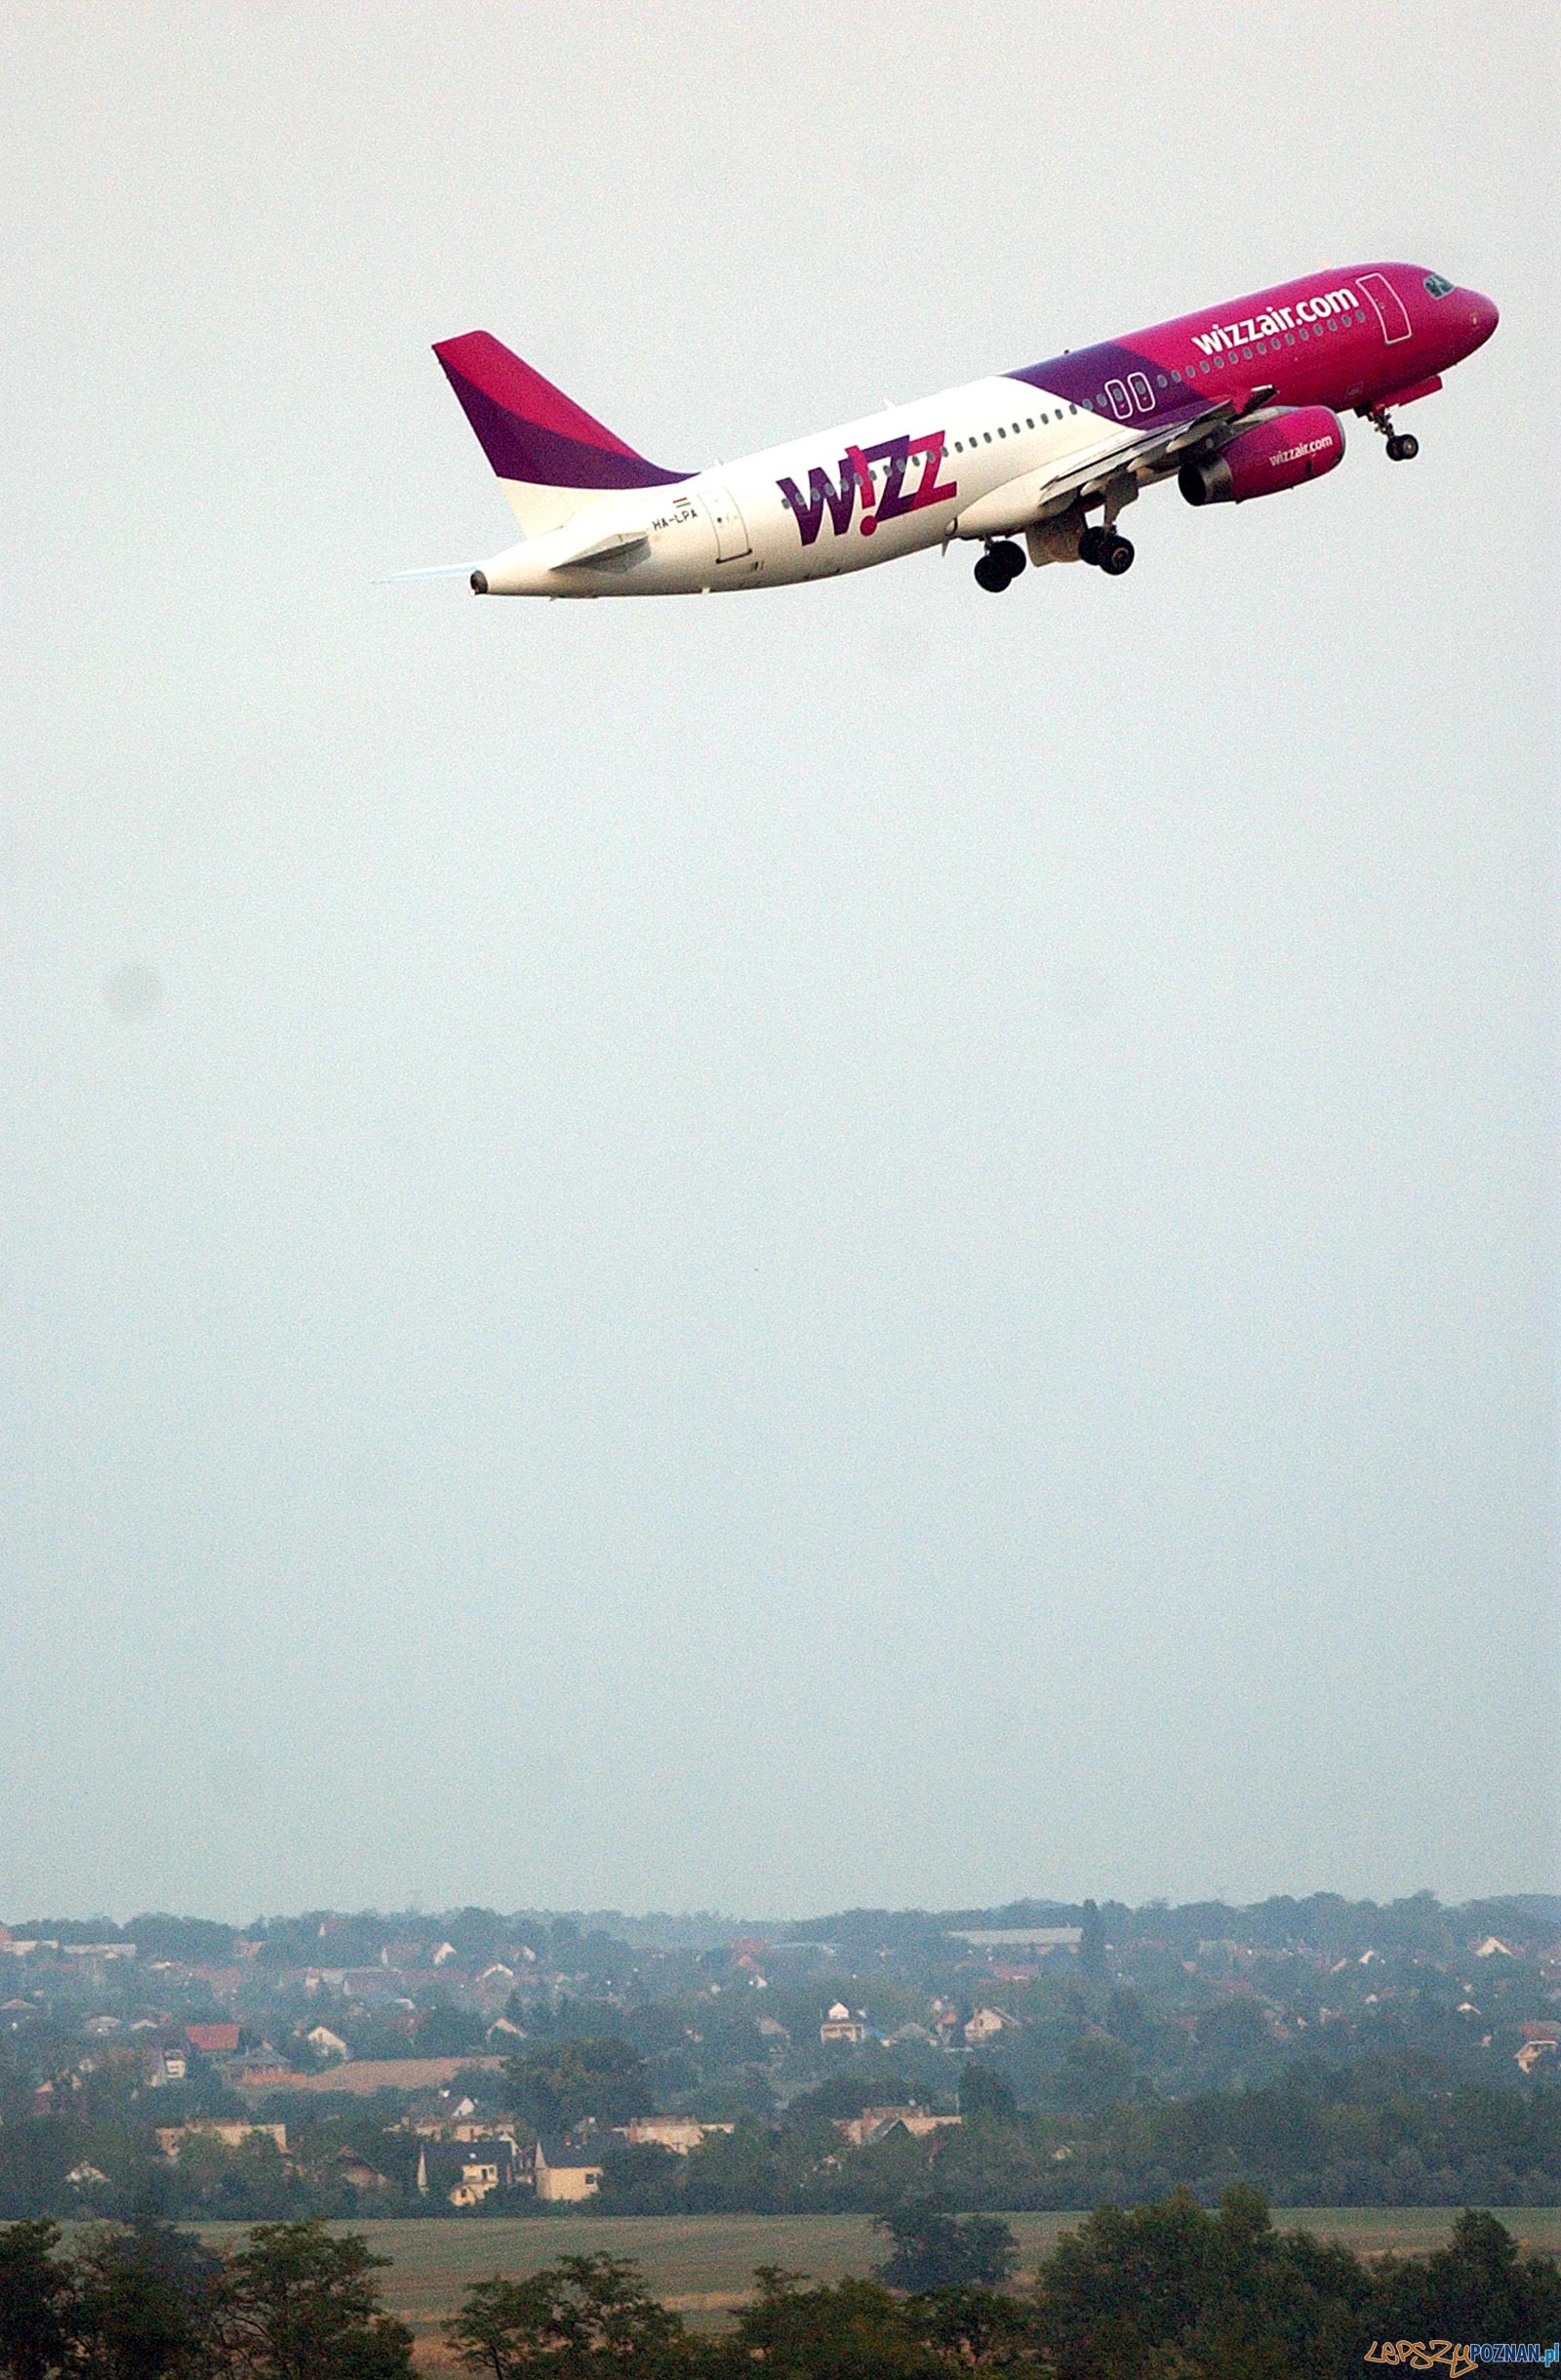 foto: wizzair - leci samolot  Foto: 